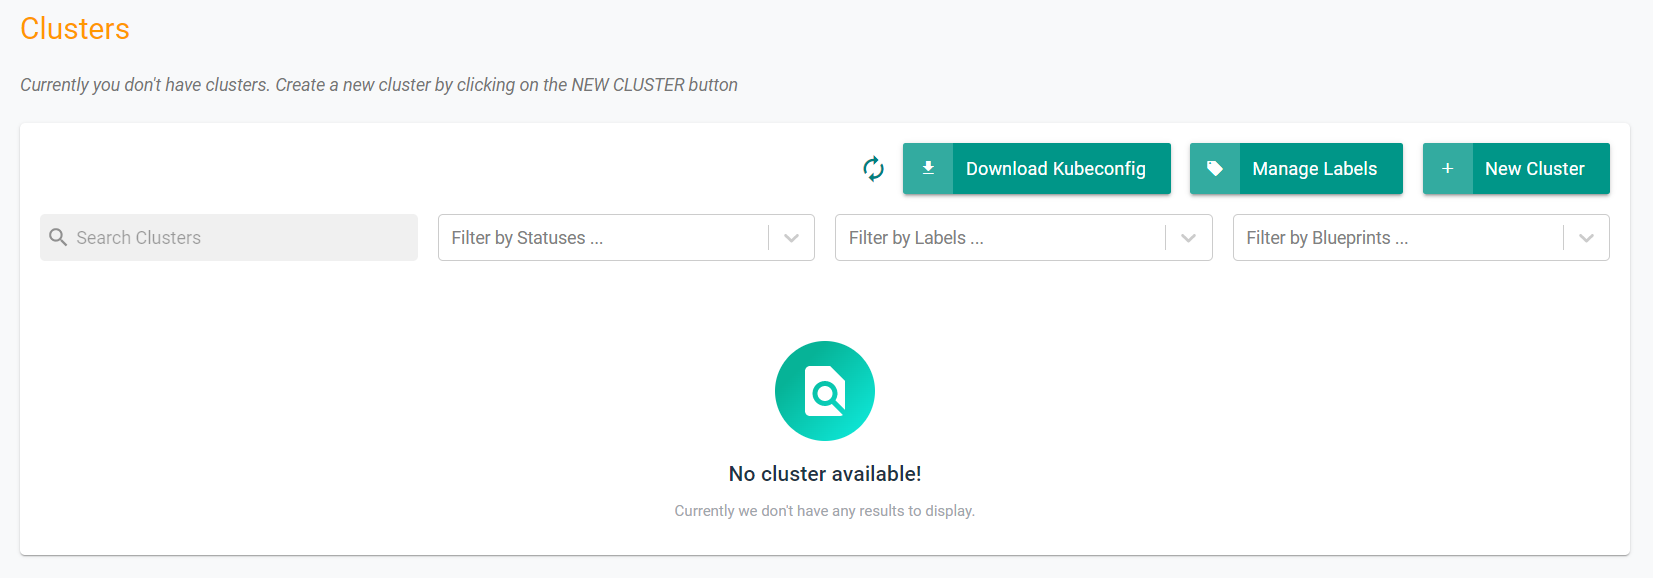 Cluster Delete